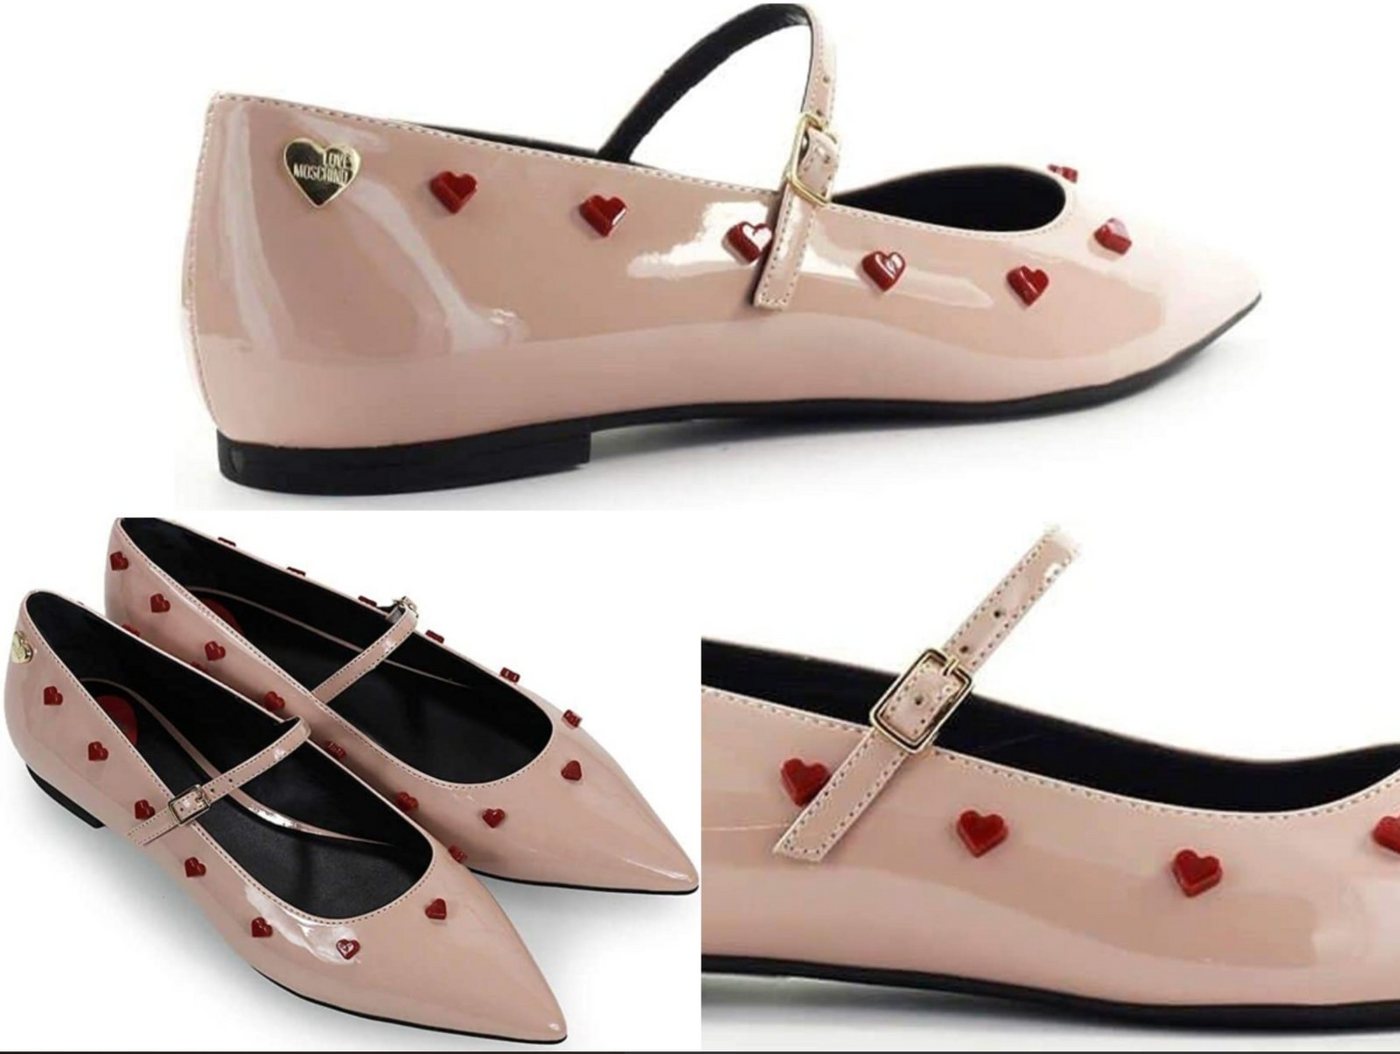 Moschino Love Moschino Iconic Ballerina Patent Leather Lackleder Flats Schuhe S Sneaker Ballerinas von Moschino